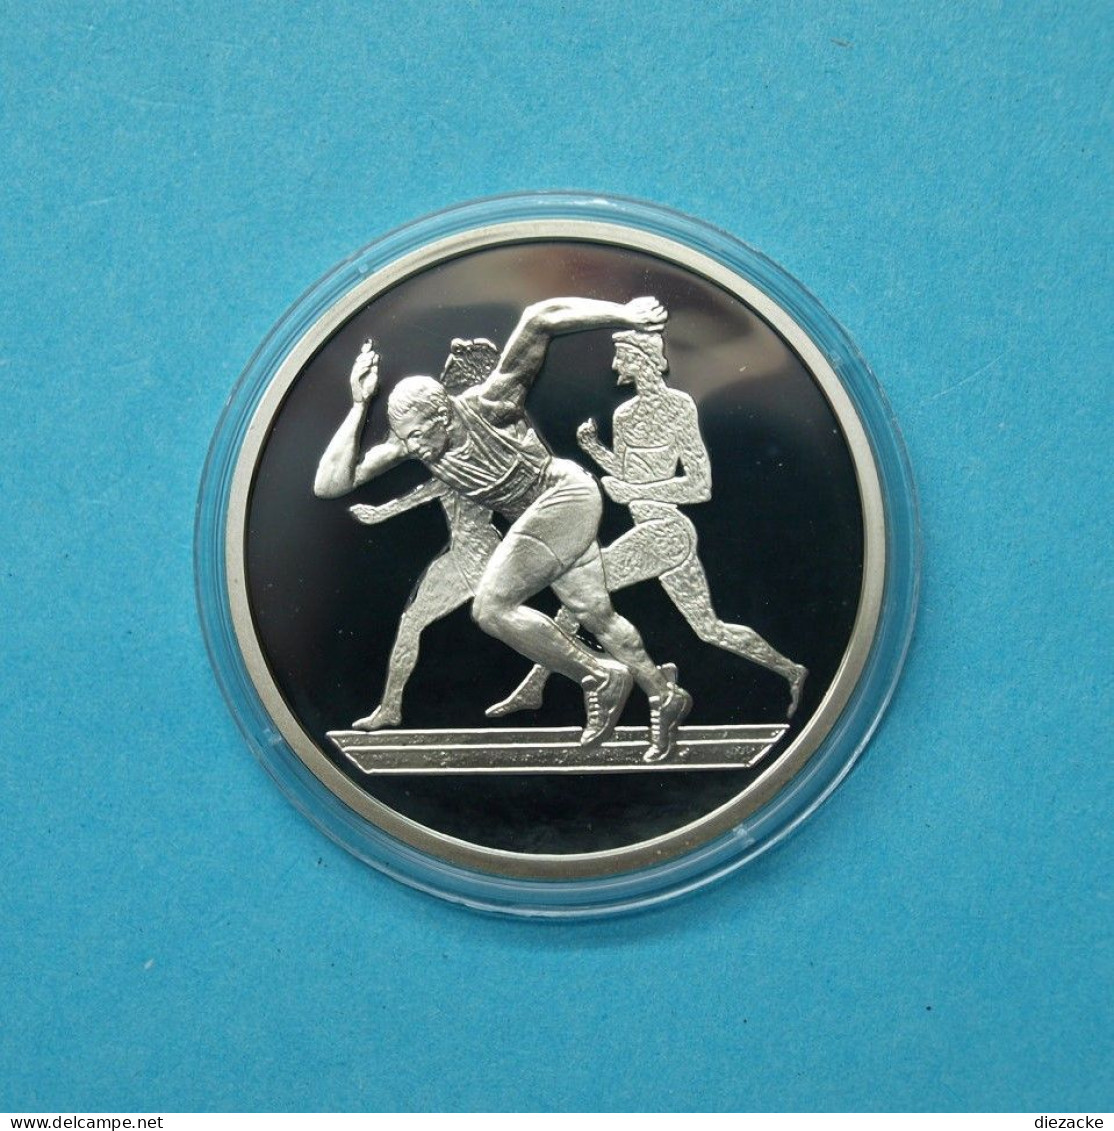 Griechenland 2004 10 Euro Olympiade Athen Sprint Silber PP (MD743 - Griechenland